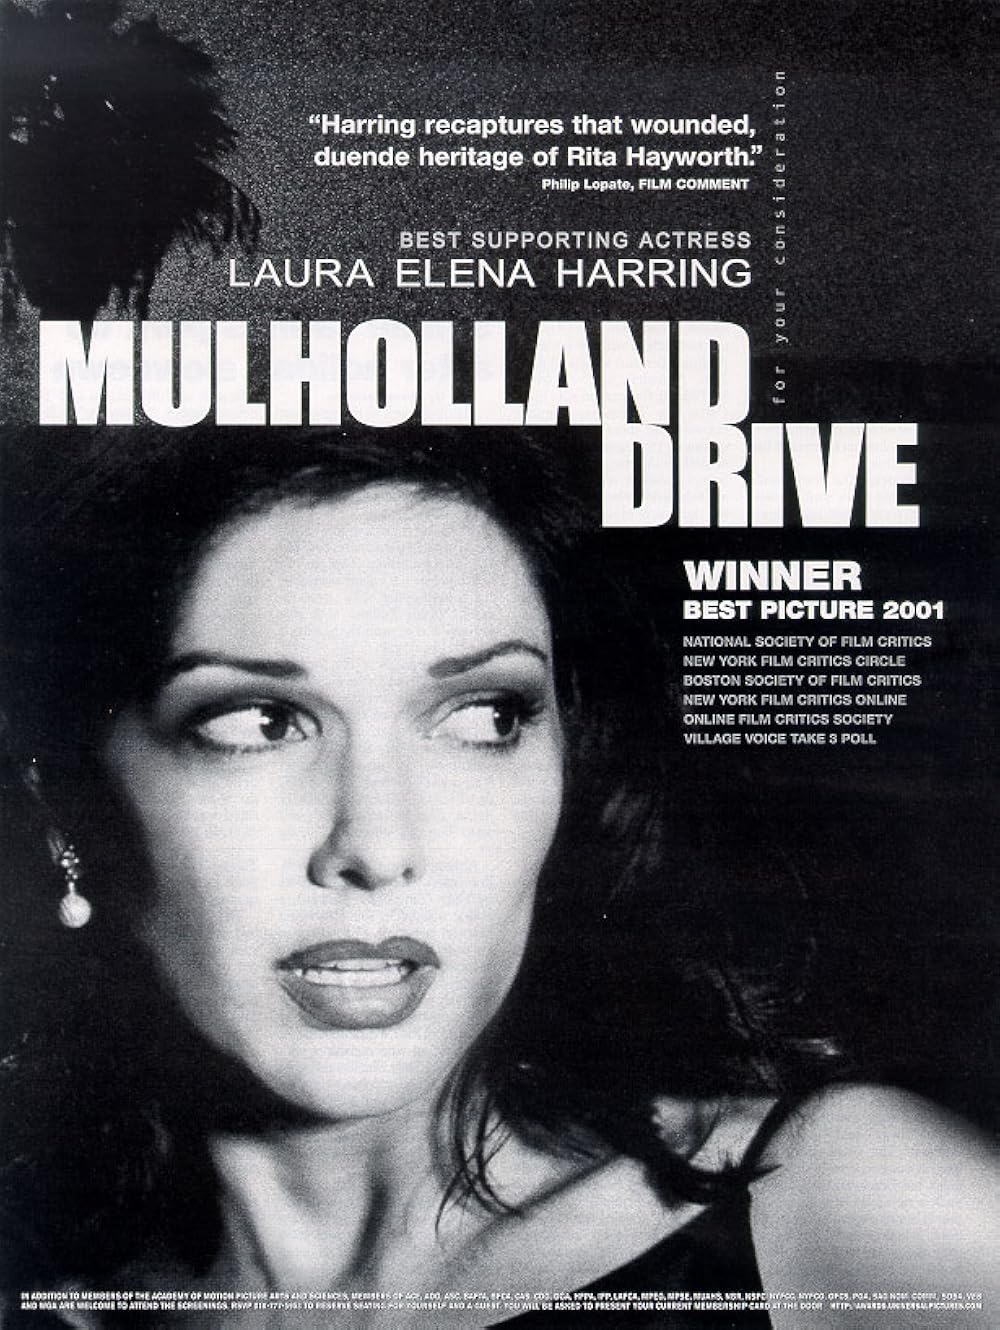 Mulholland Drive (2001) 1503Kbps 23.976Fps 48Khz BluRay DTS-HD MA 2.0Ch Turkish Audio TAC